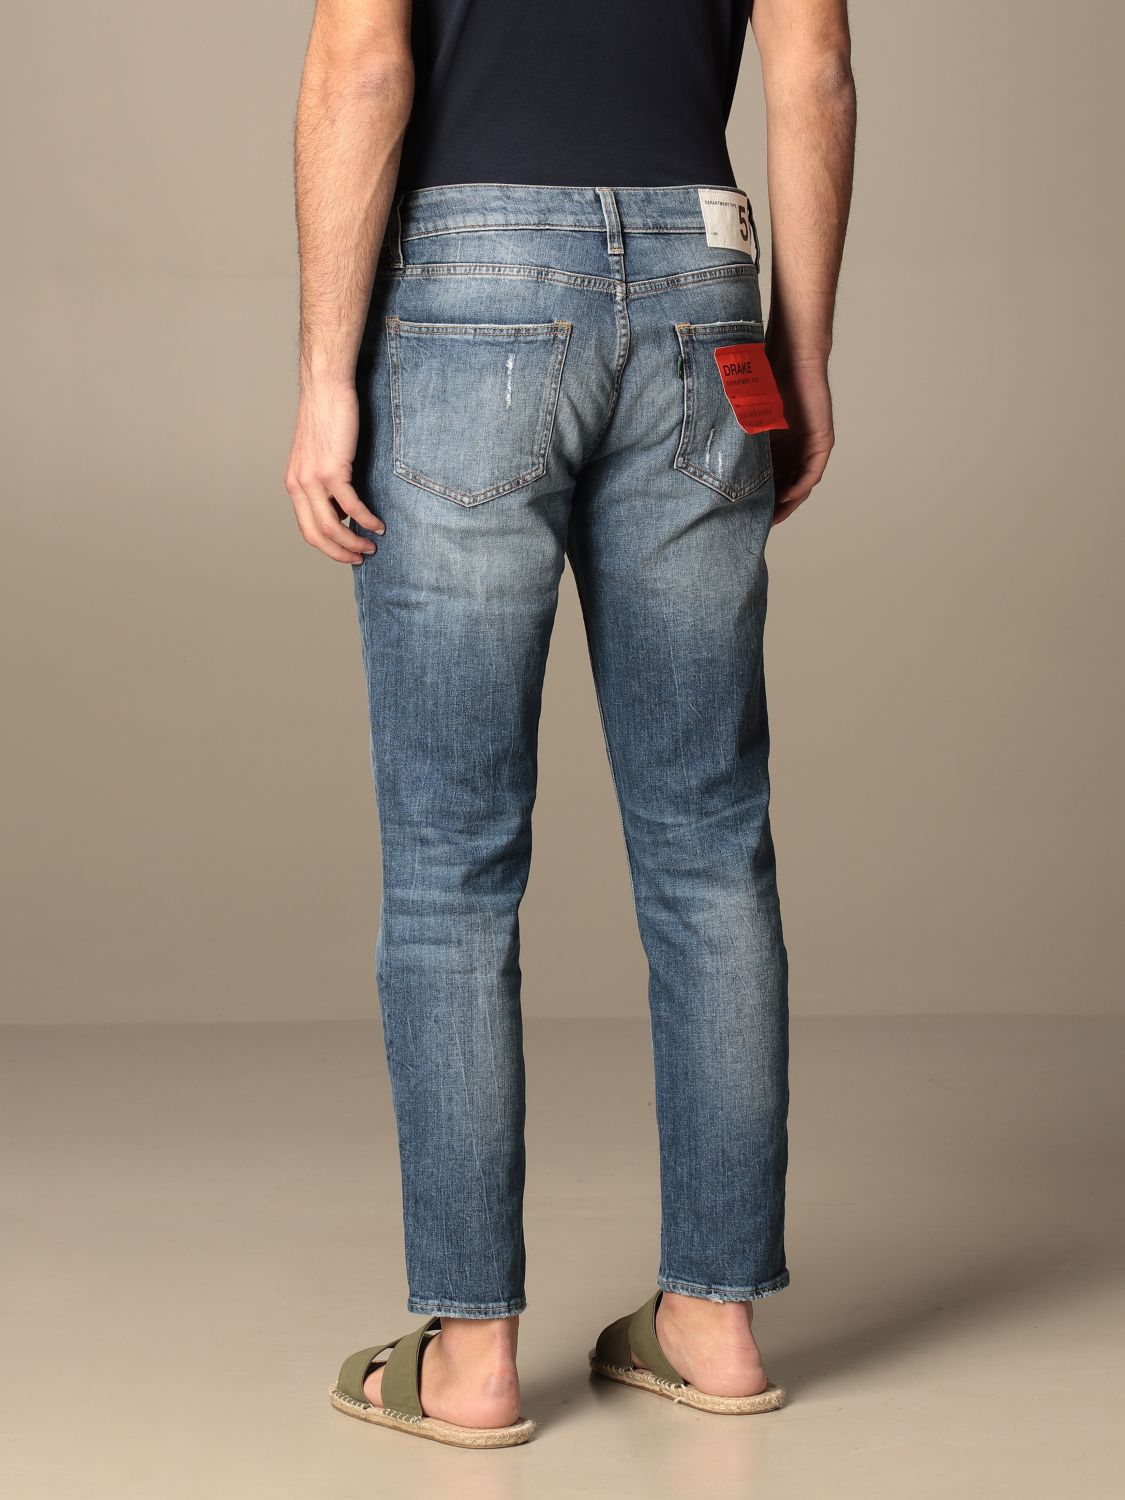 Department Five 5-pocket jeans